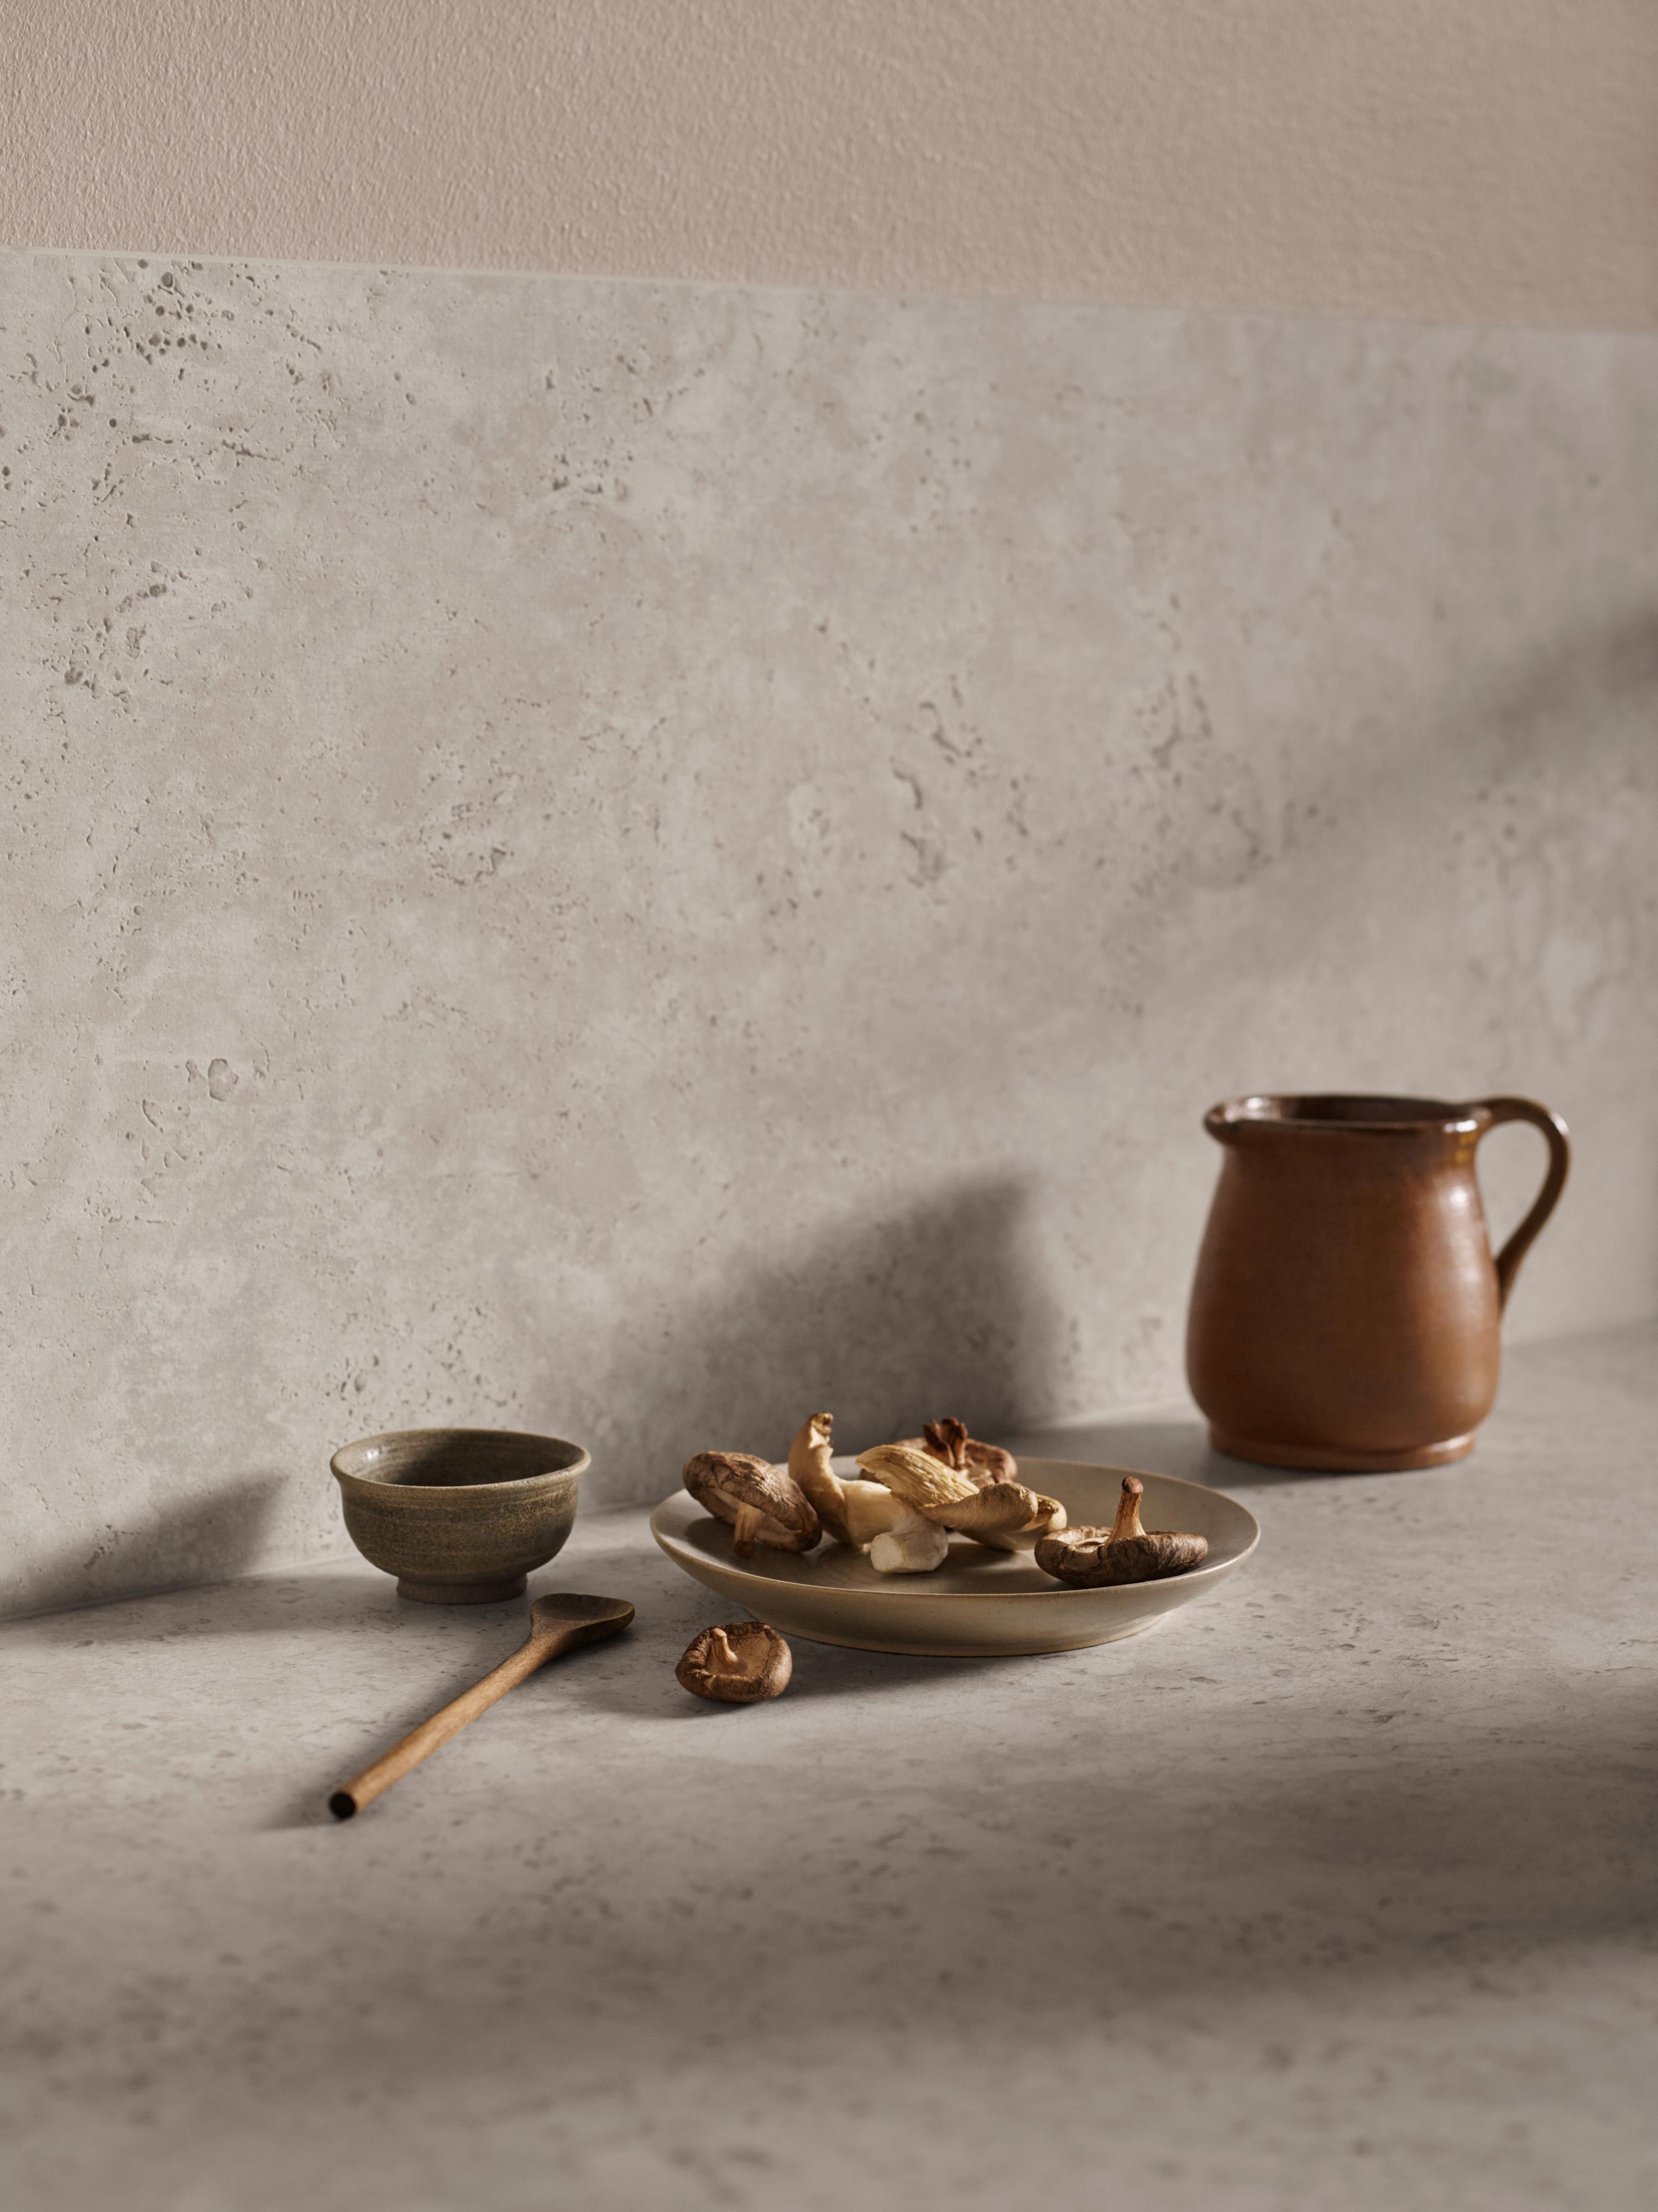 Spoon, plate, jug and bowl on a grey-brown worktop